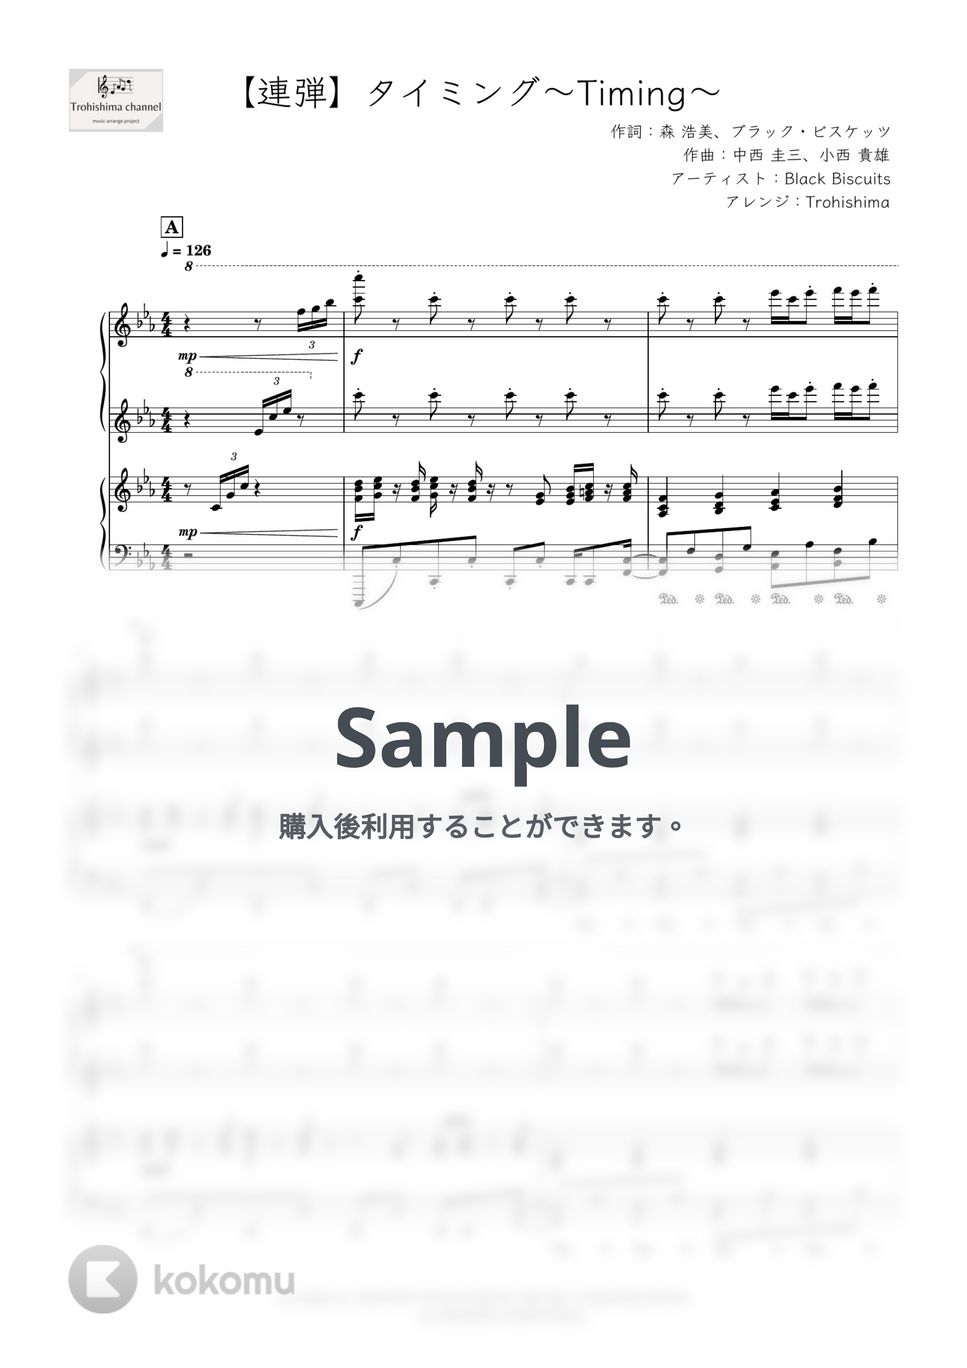 Black Biscuits - タイミング～Timing～ (ピアノ連弾) by Trohishima